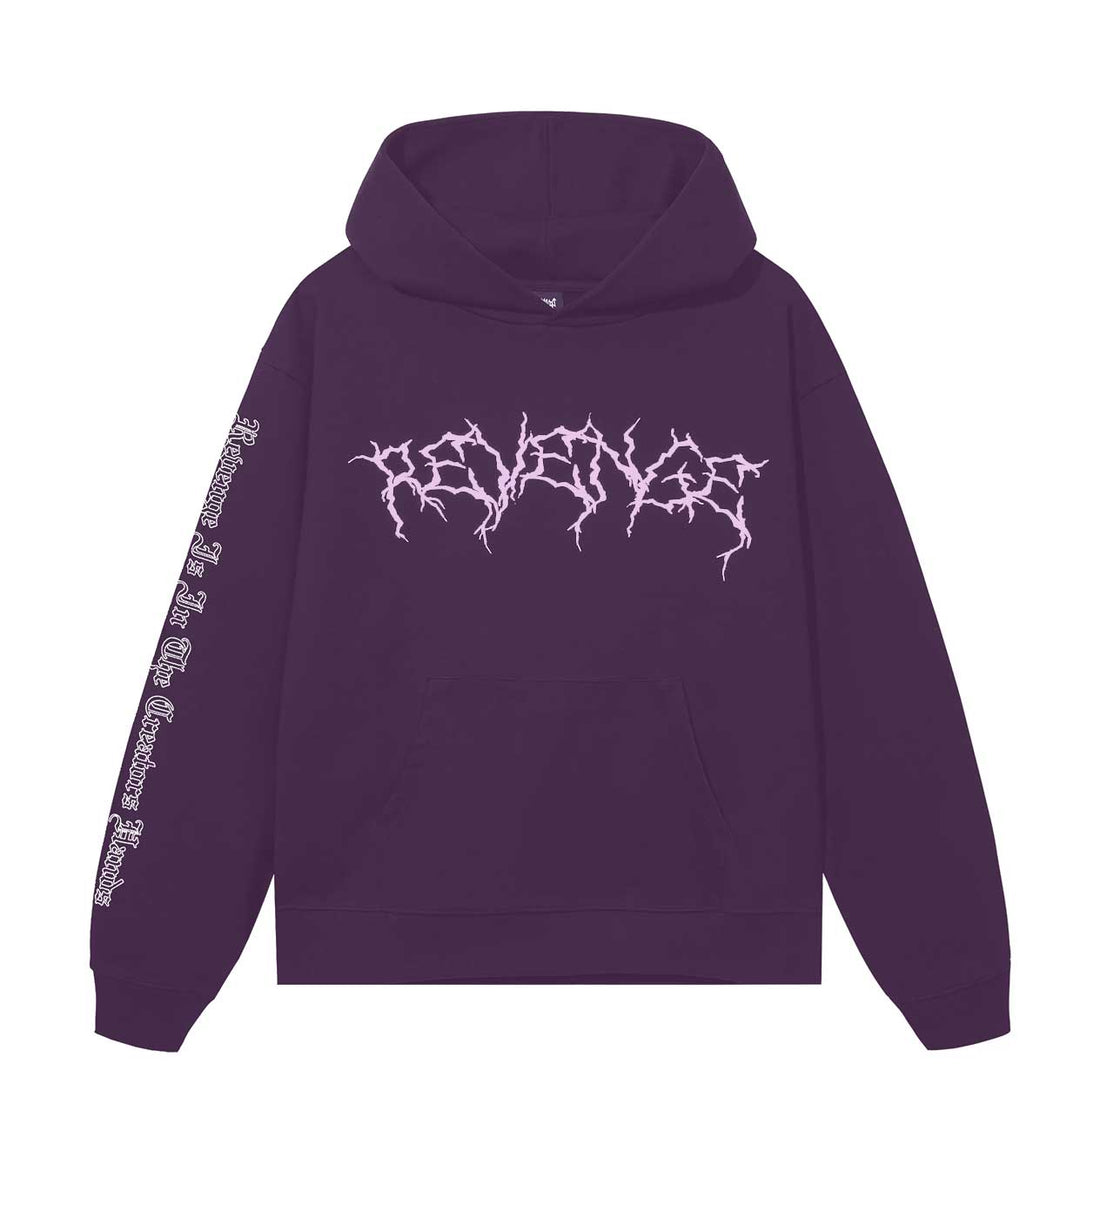 Revenge Xxxtentacion Lightning Hoodie Purple Front View